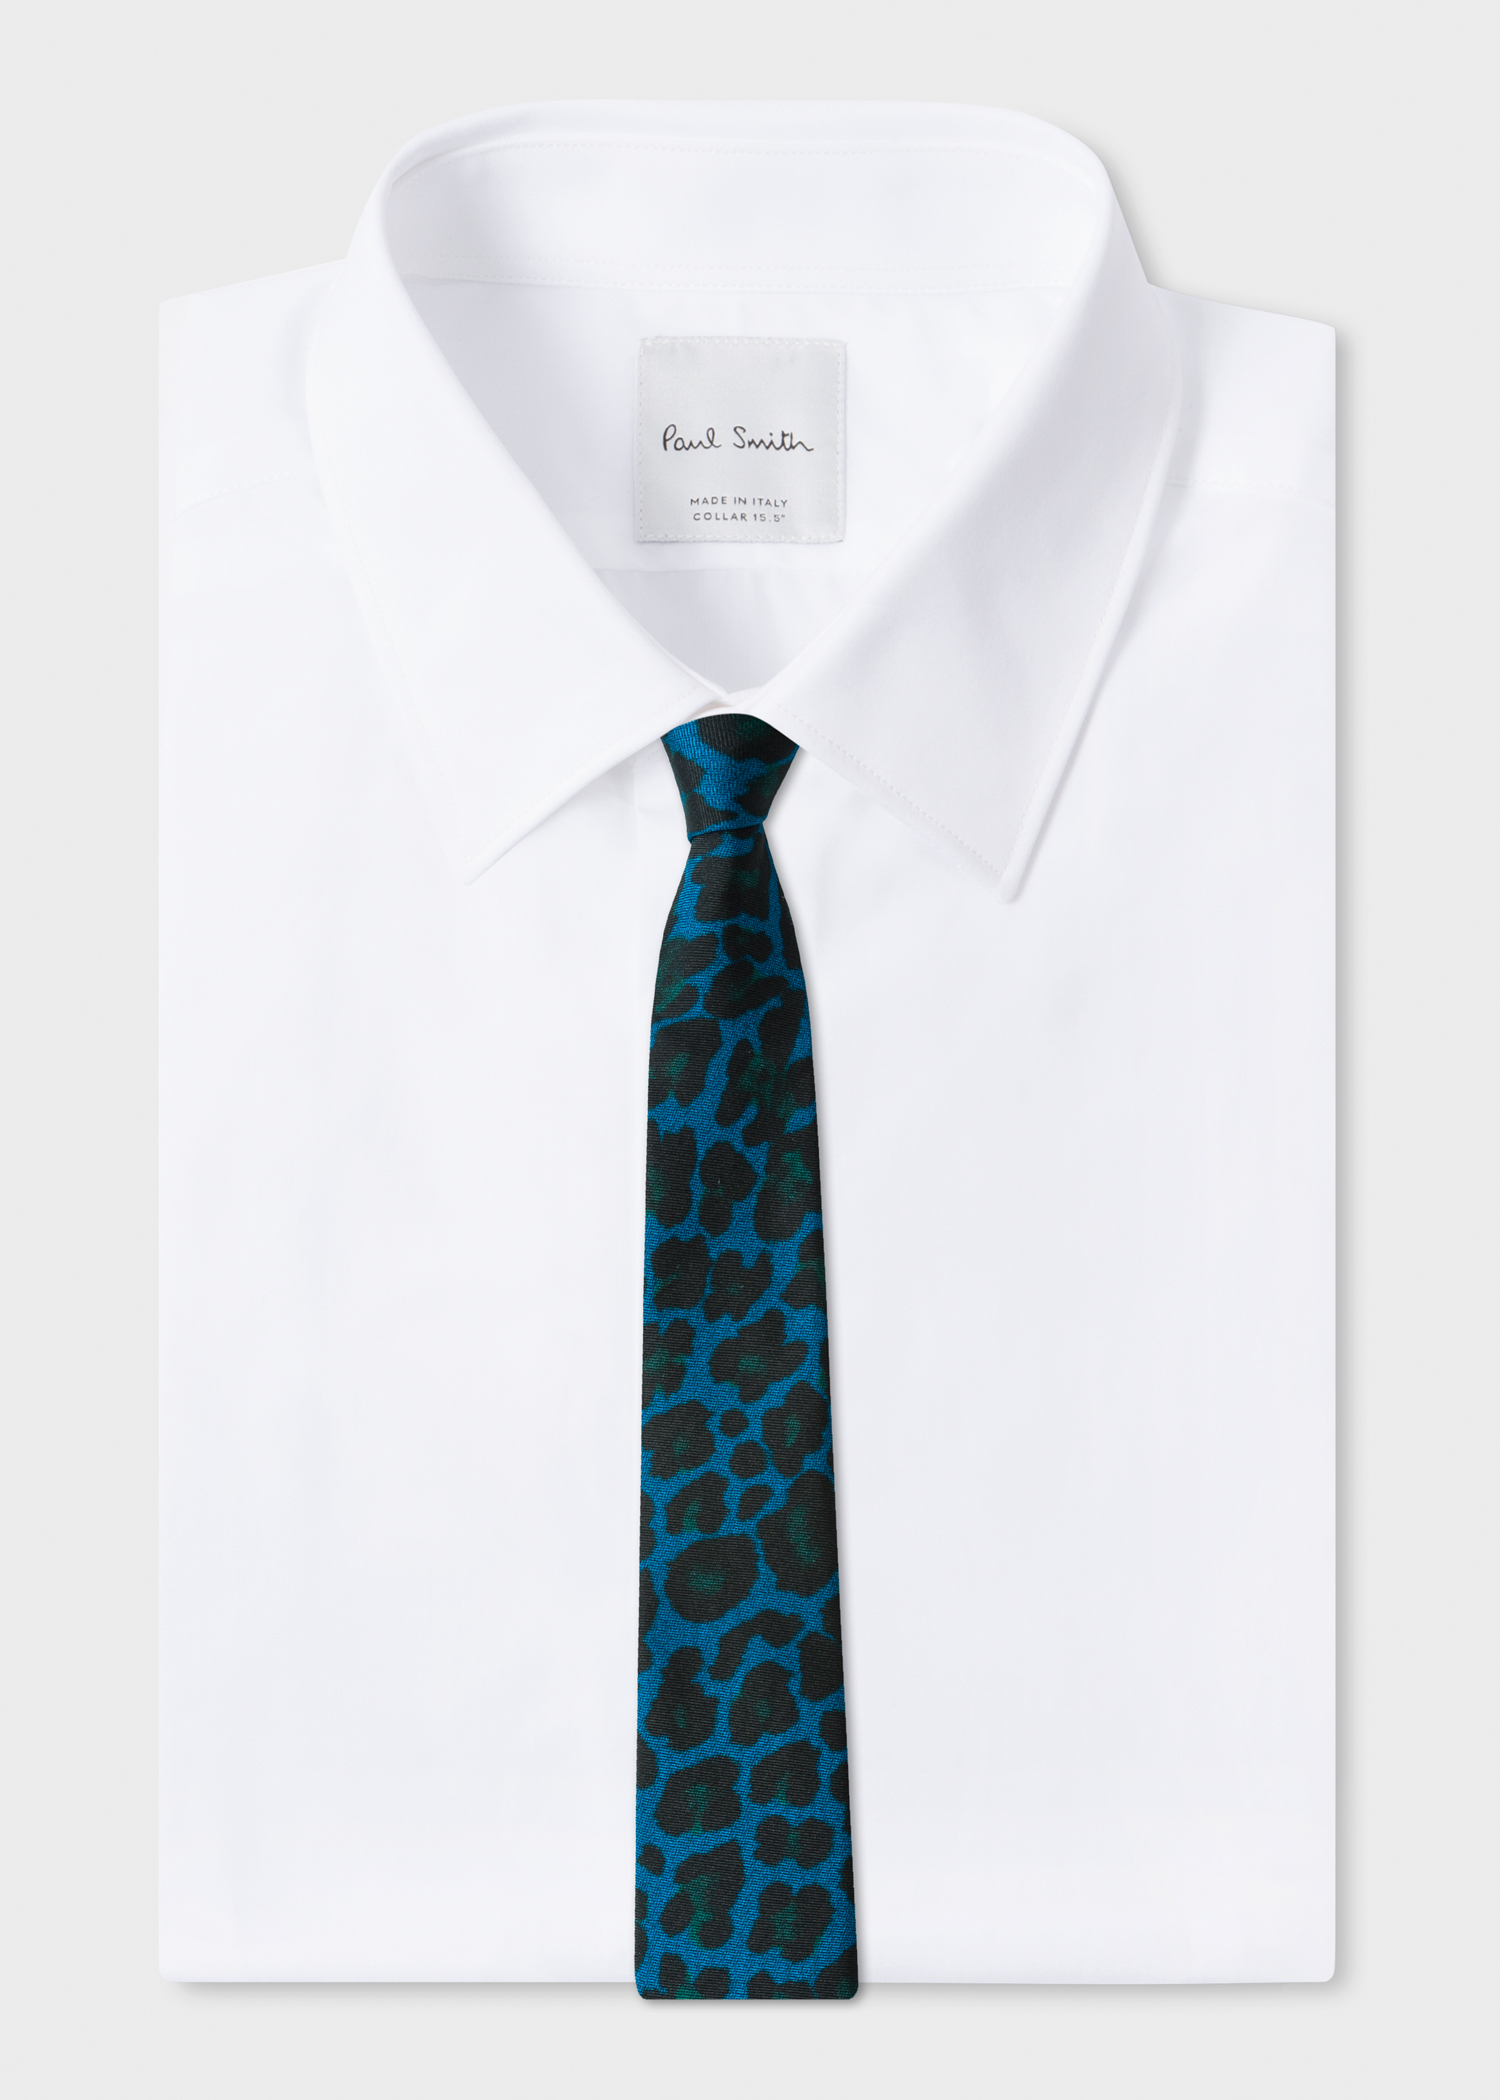 On Shirt View - Men's Blue 'Leopard' Print Narrow Silk Tie Paul Smith